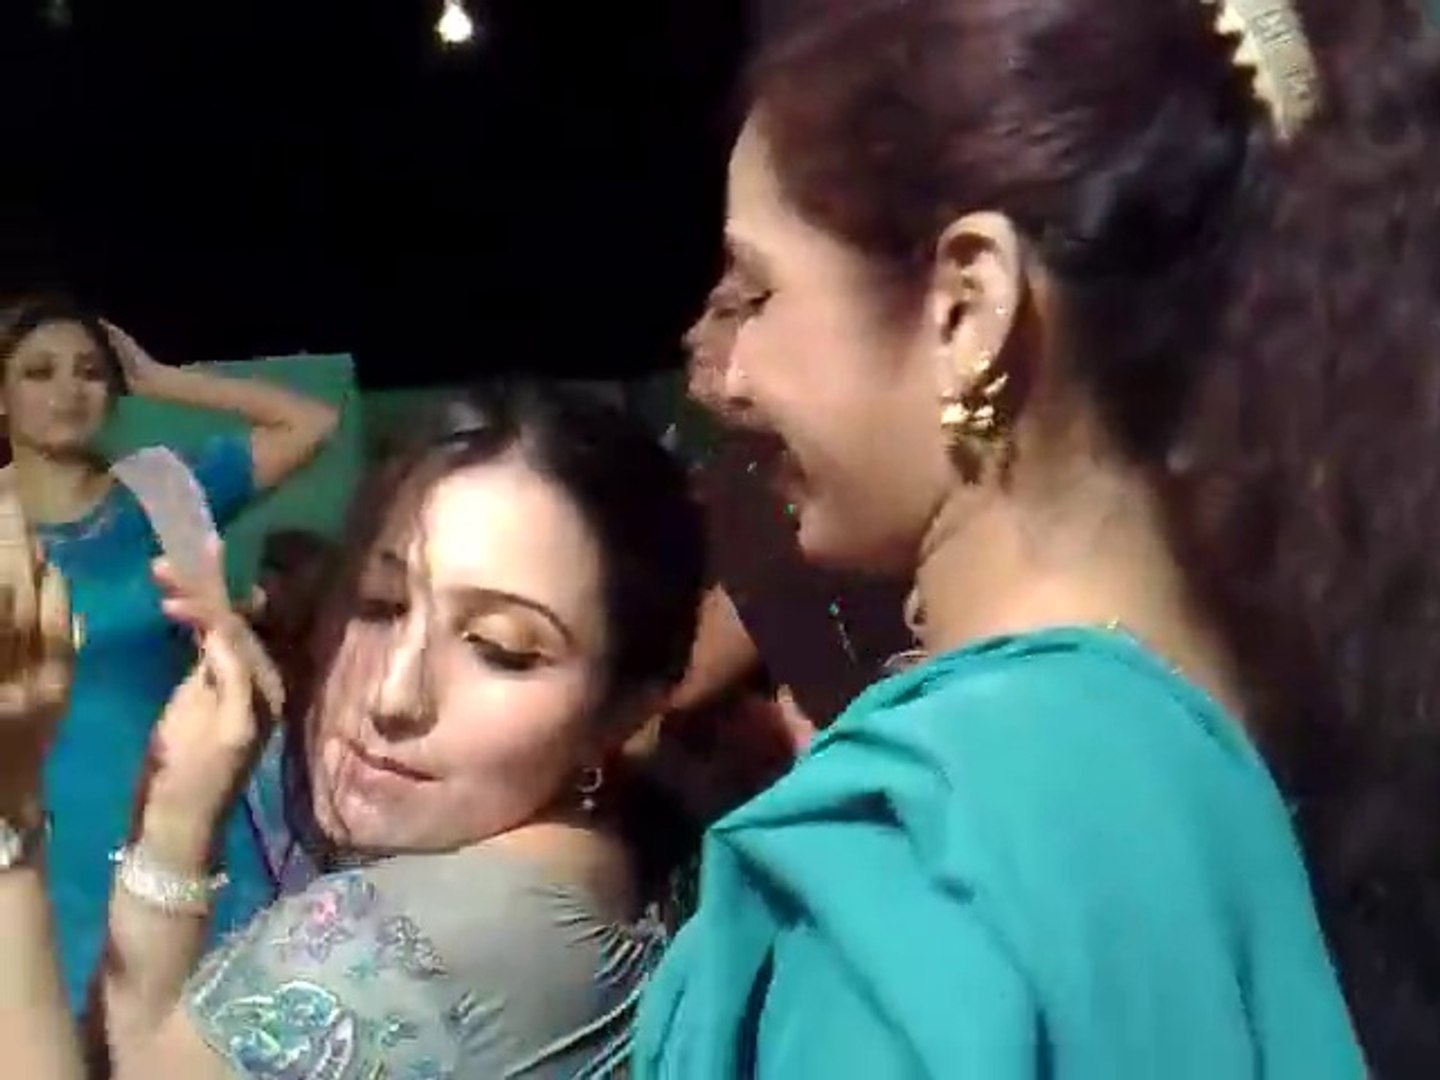 Heera Ki Sex Videos - Heera Mandi Full Hot Dance In Home Party - video Dailymotion